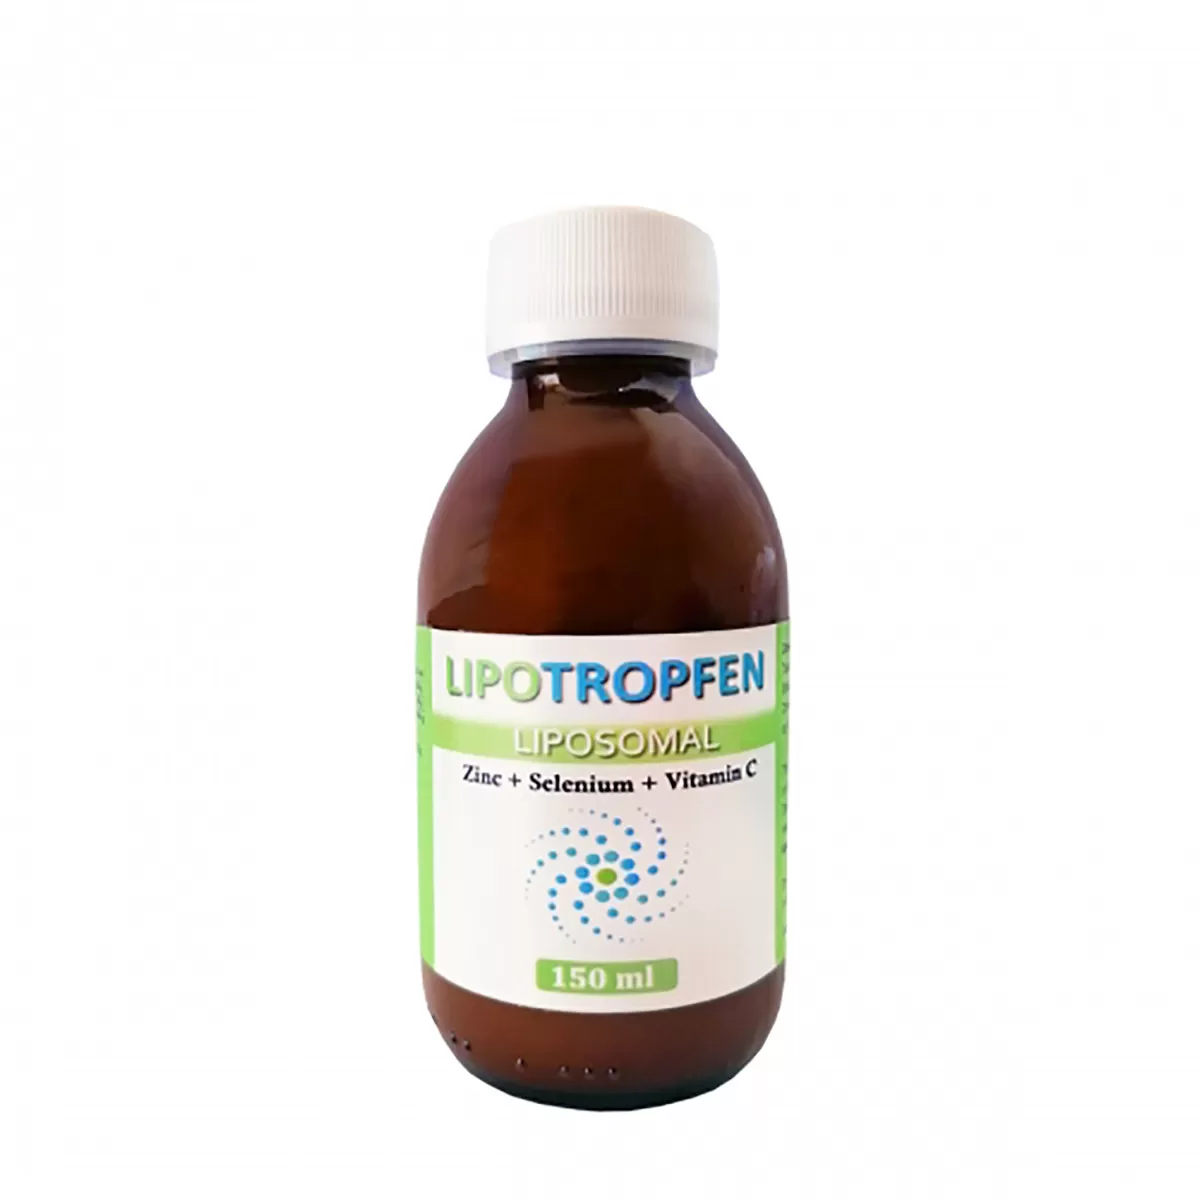 Lipotropfen liposomal cink + selen + vitamin C, 150ml 